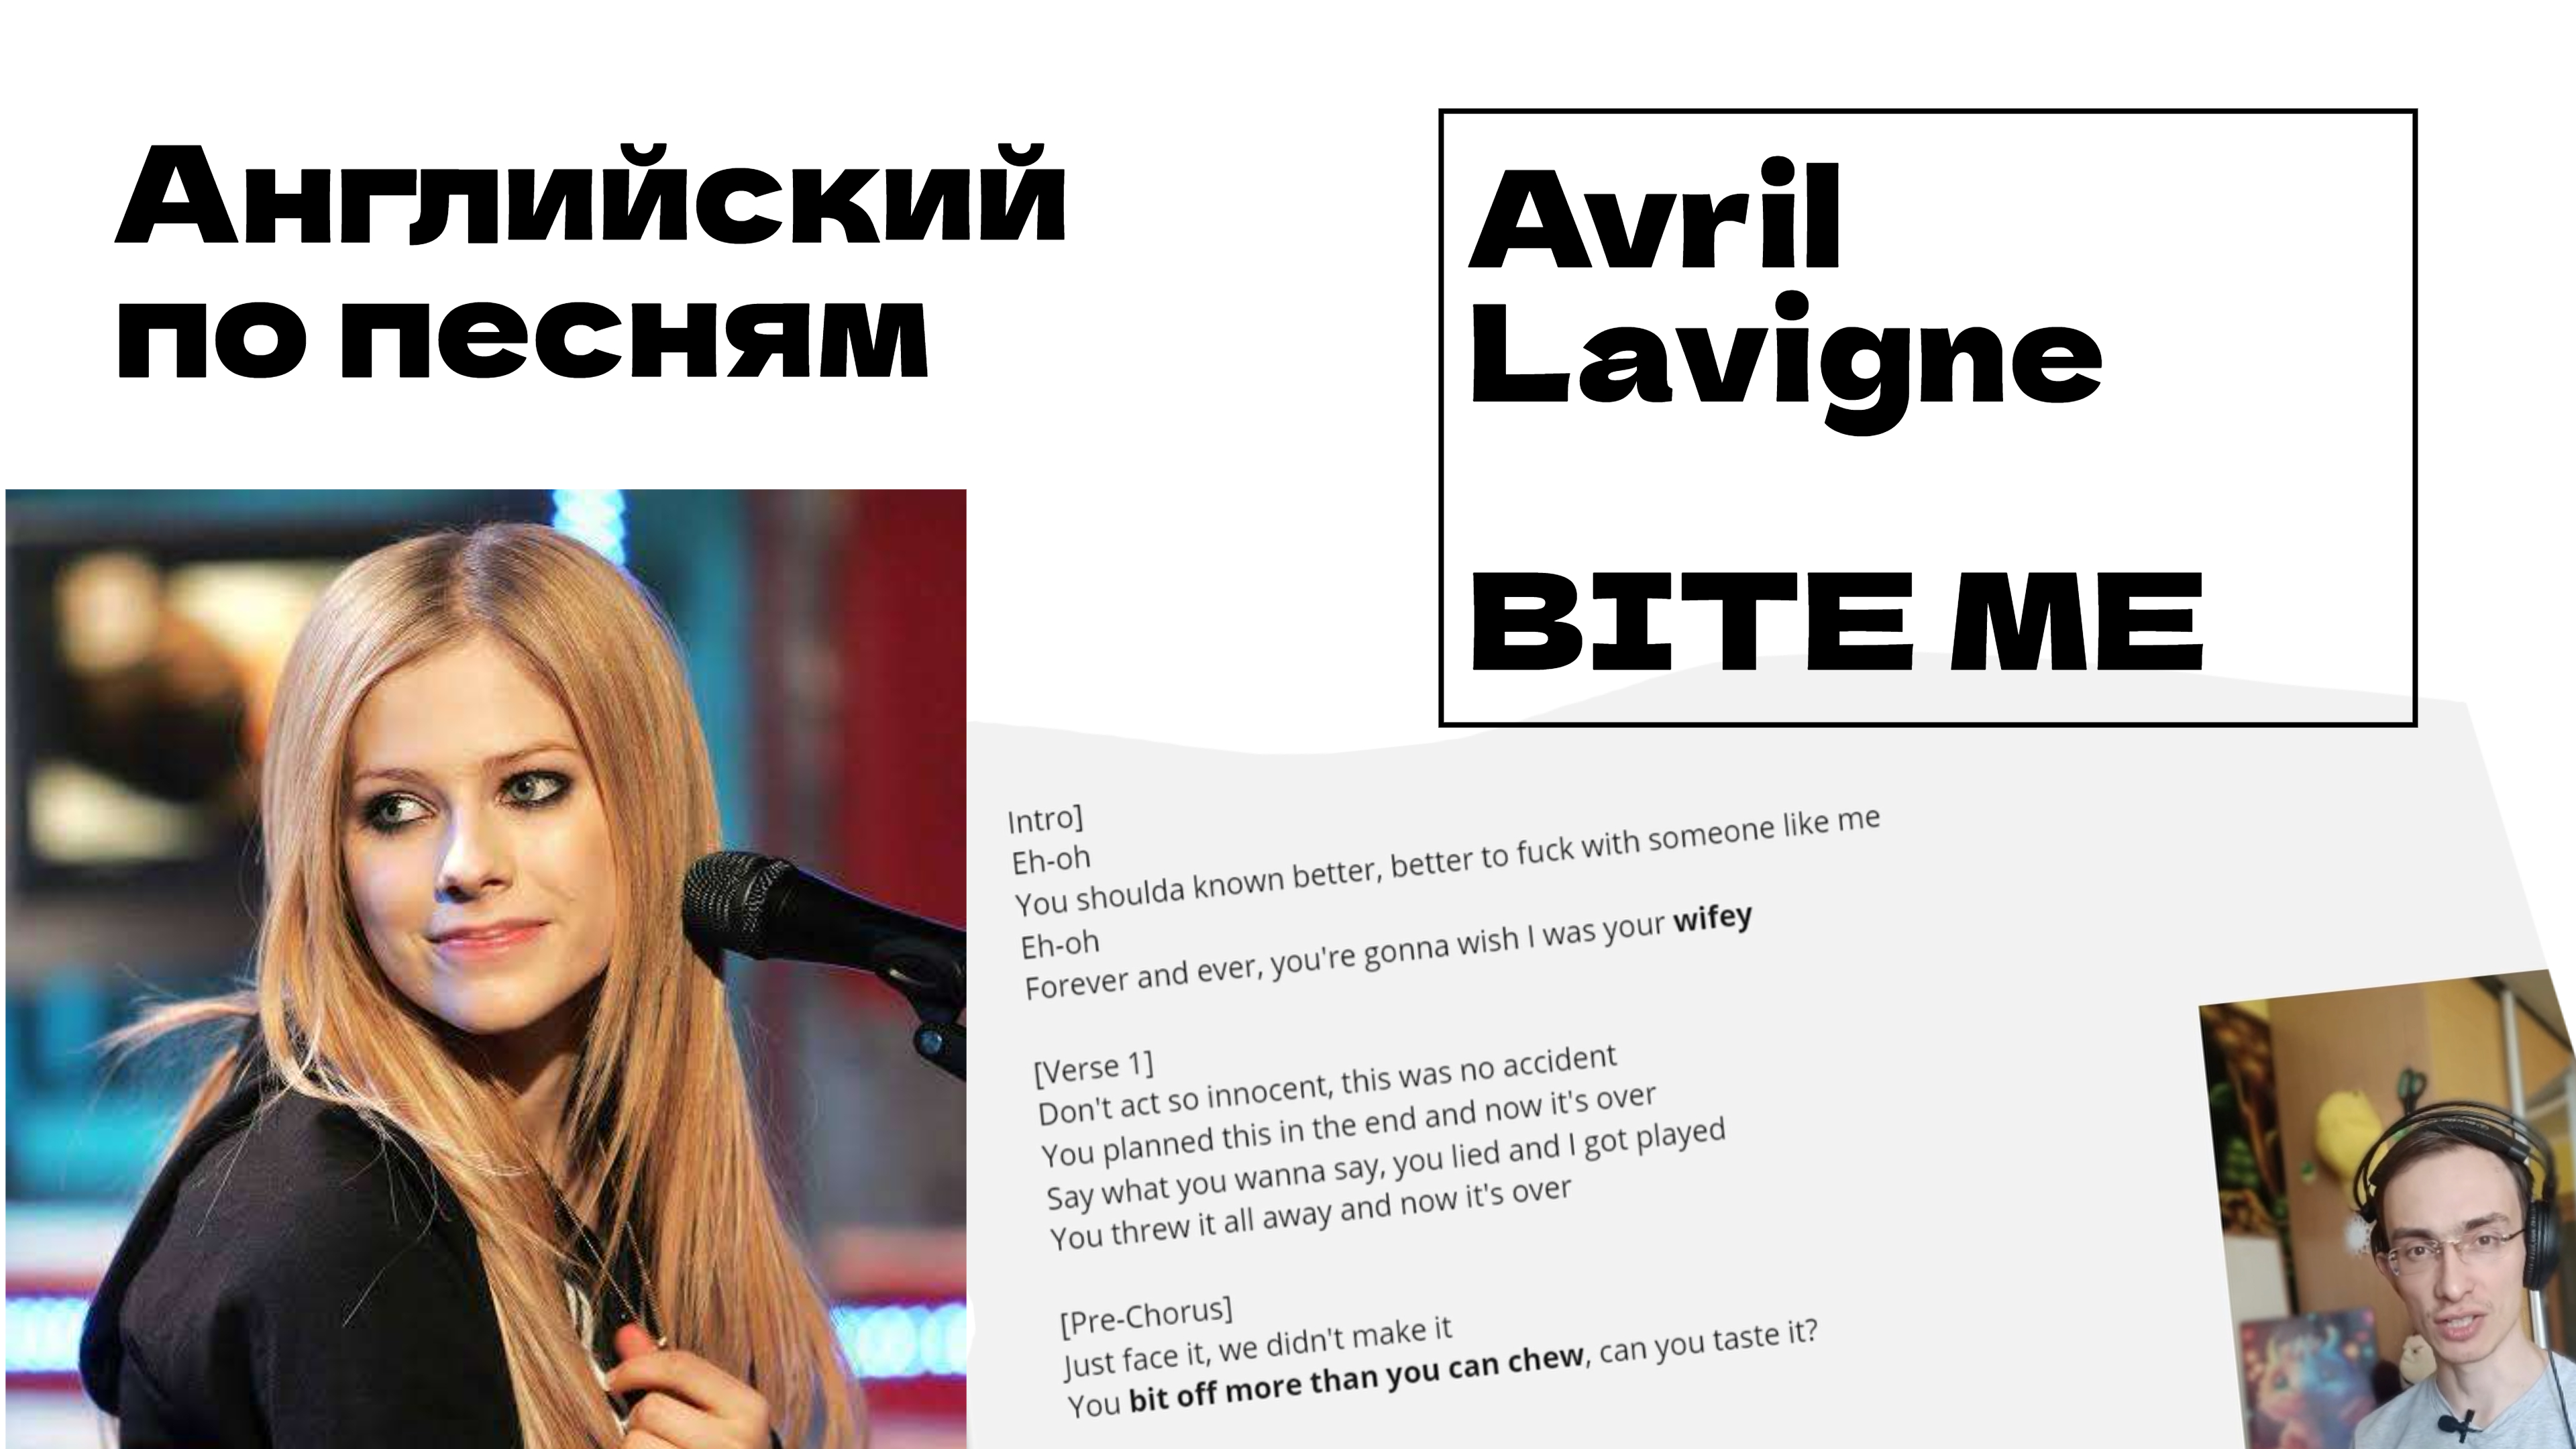 Английский по песне Bite me - Avril Lavigne